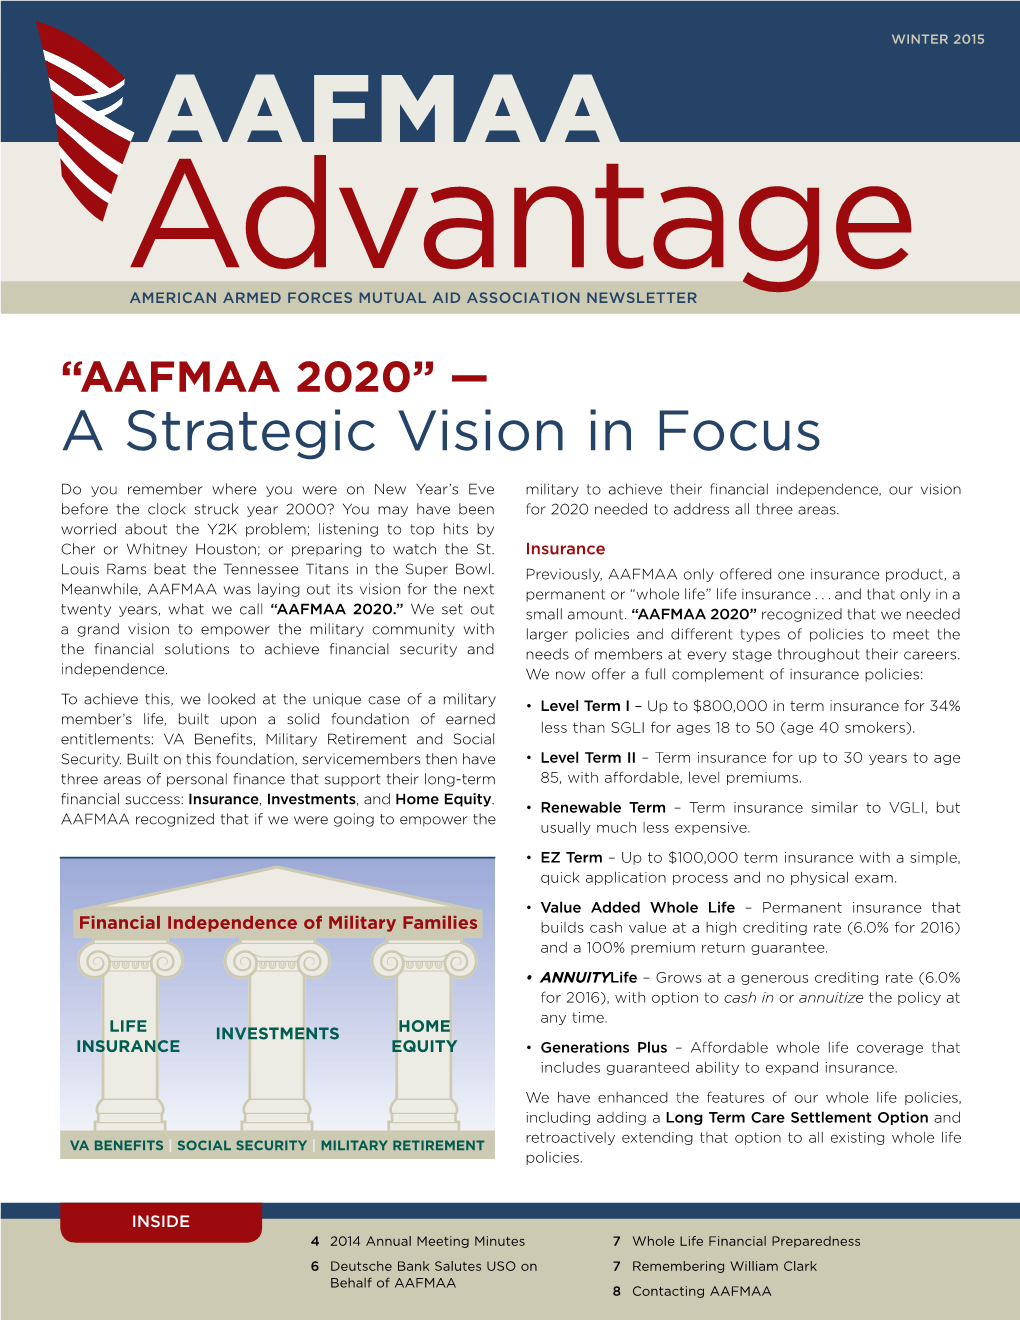 AAFMAA 2020” — a Strategic Vision in Focus